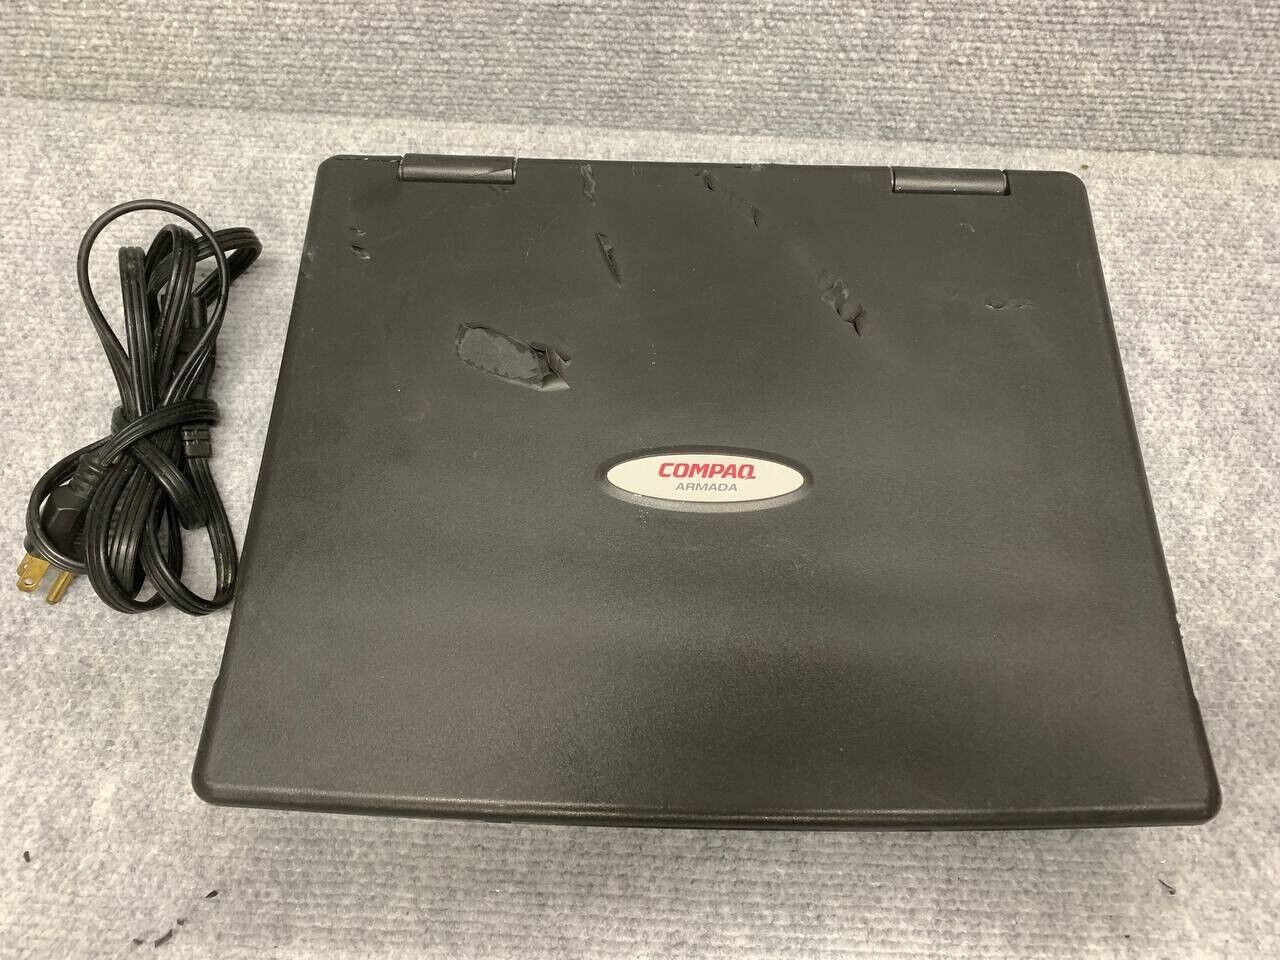 Compaq Armada 1750 Laptop Intel TESTED